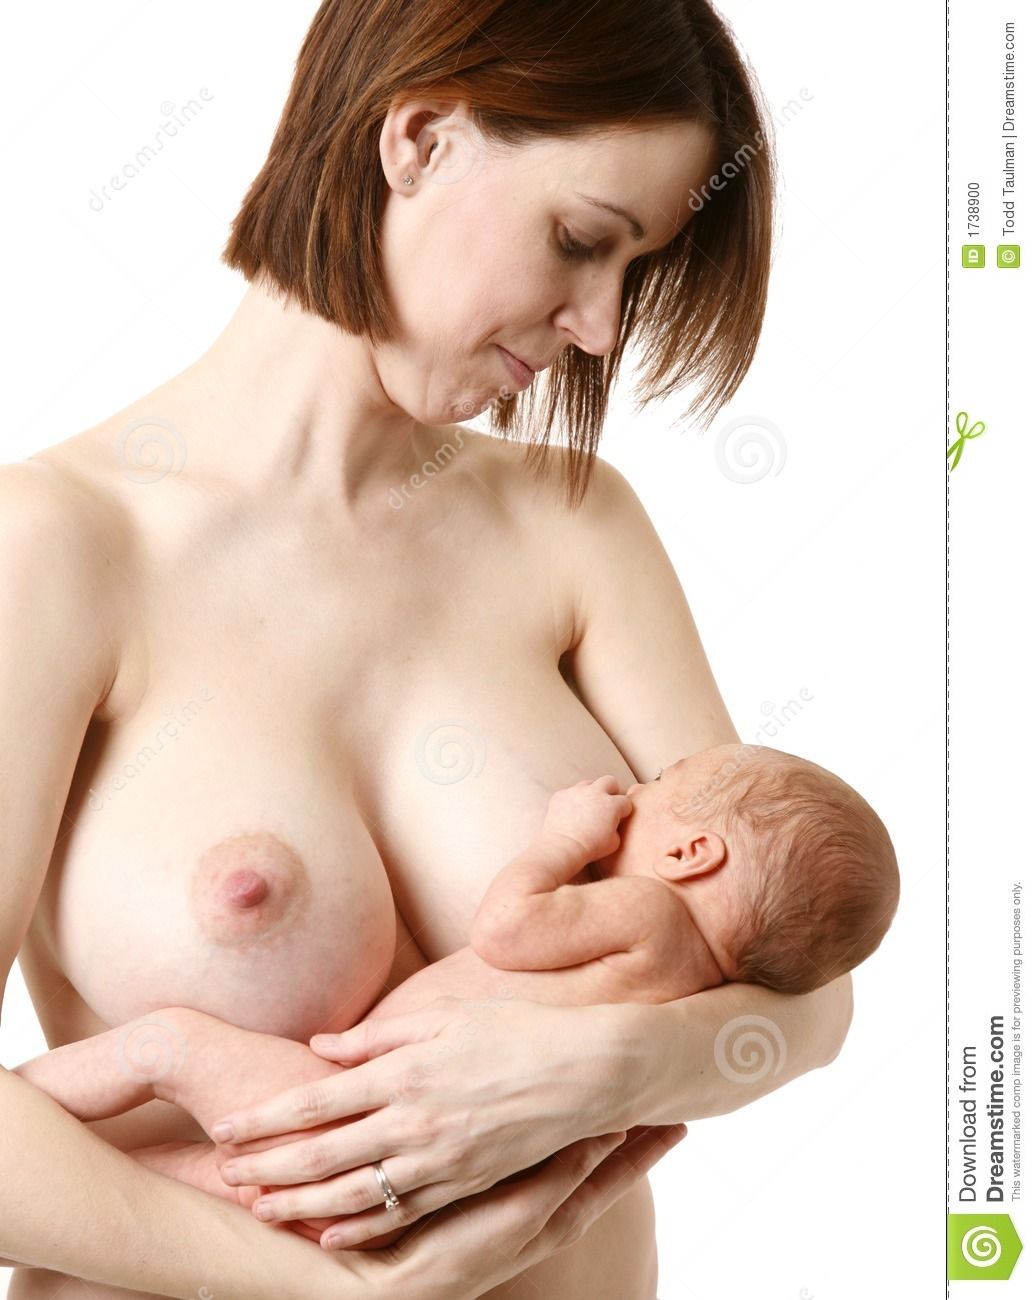 Lactating Woman Nude